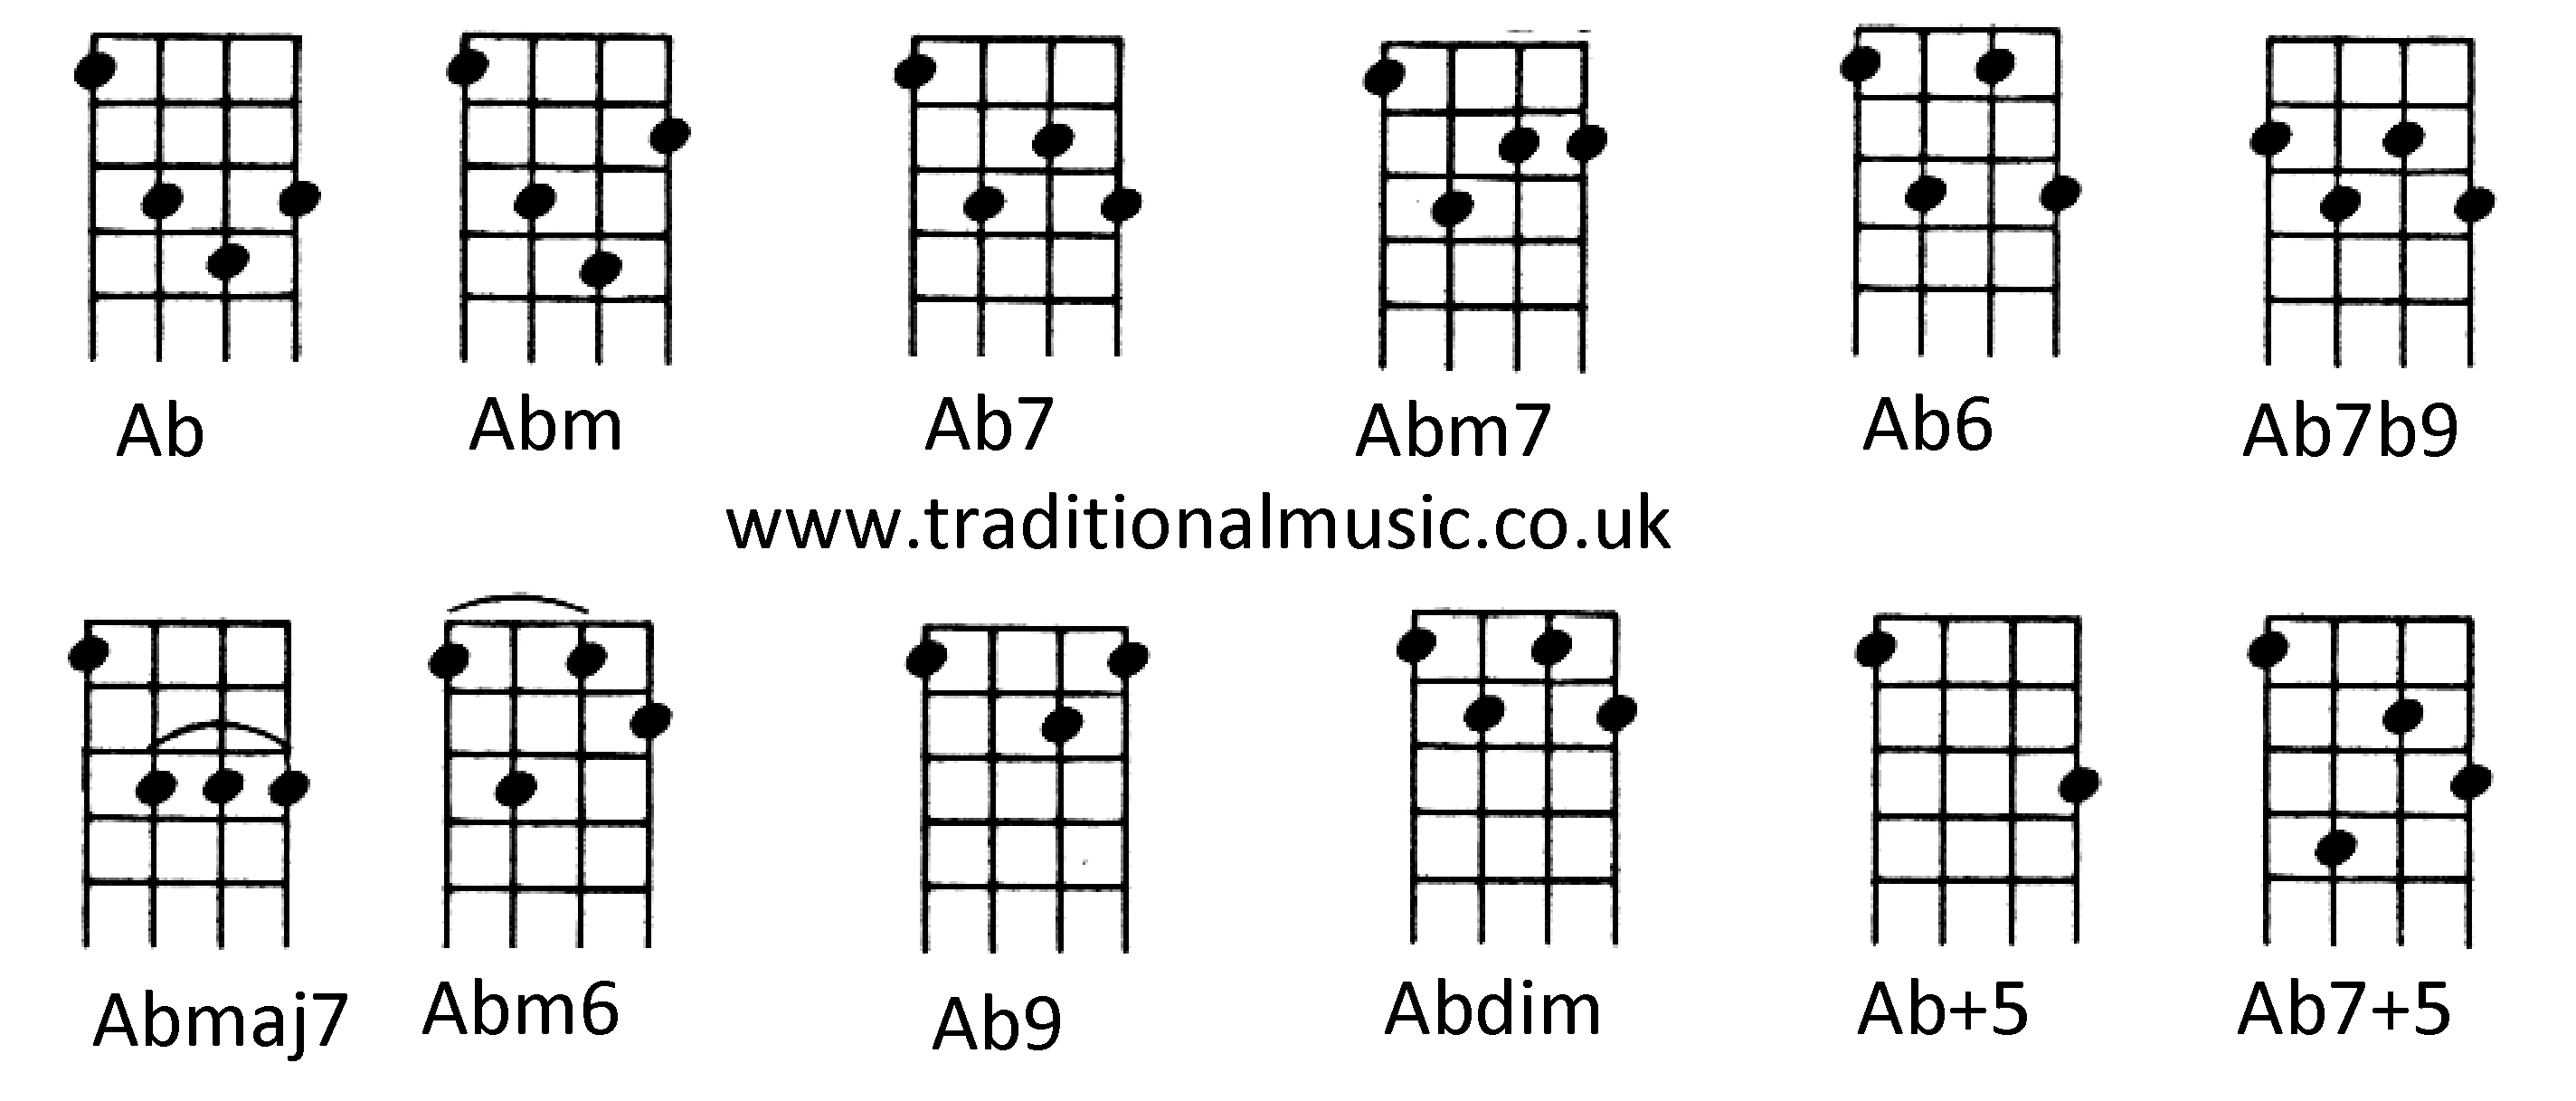 Chords for Ukulele (C tuning)Ab Abm Ab7 Abm7 Ab6 Ab7b9 Abmaj7 Abm6 Ab9 Abdim Ab+5 Ab7+5